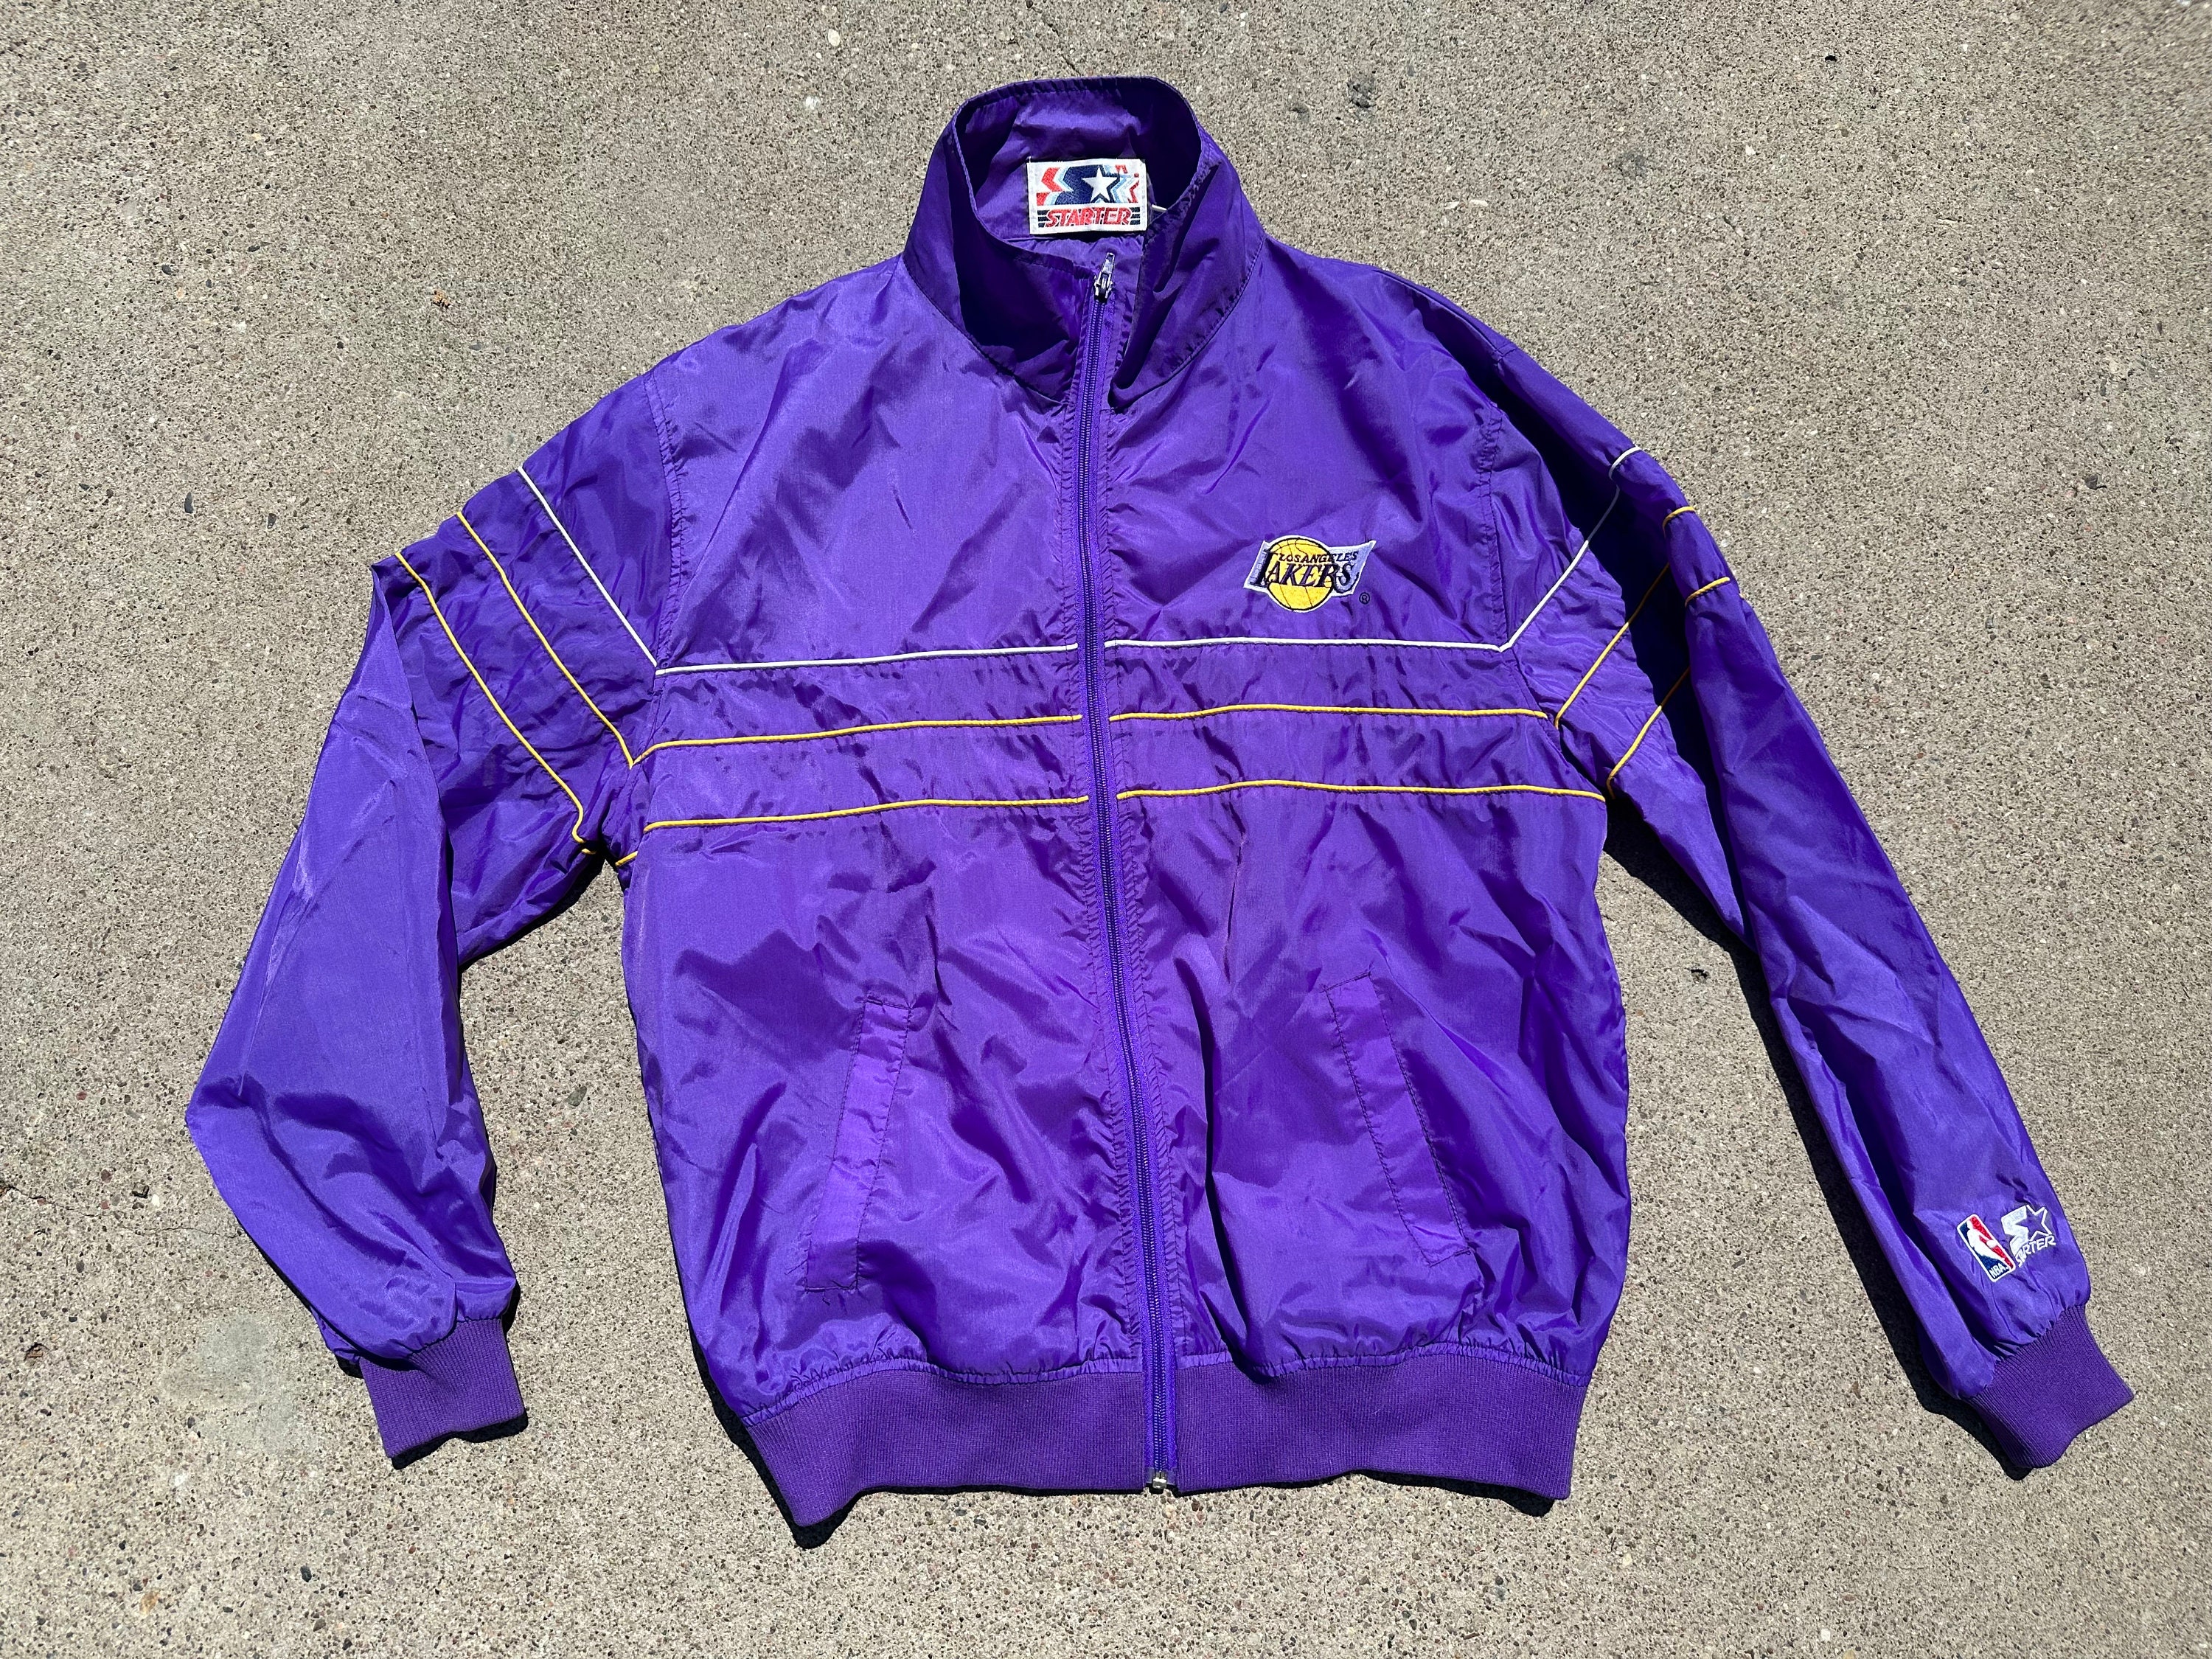 Vintage 1990s Champion Los Angeles Lakers NBA Bomber Jacket / Athleisure Sportswear / Streetwear Fashion / Vintage Champion / 90s NBA